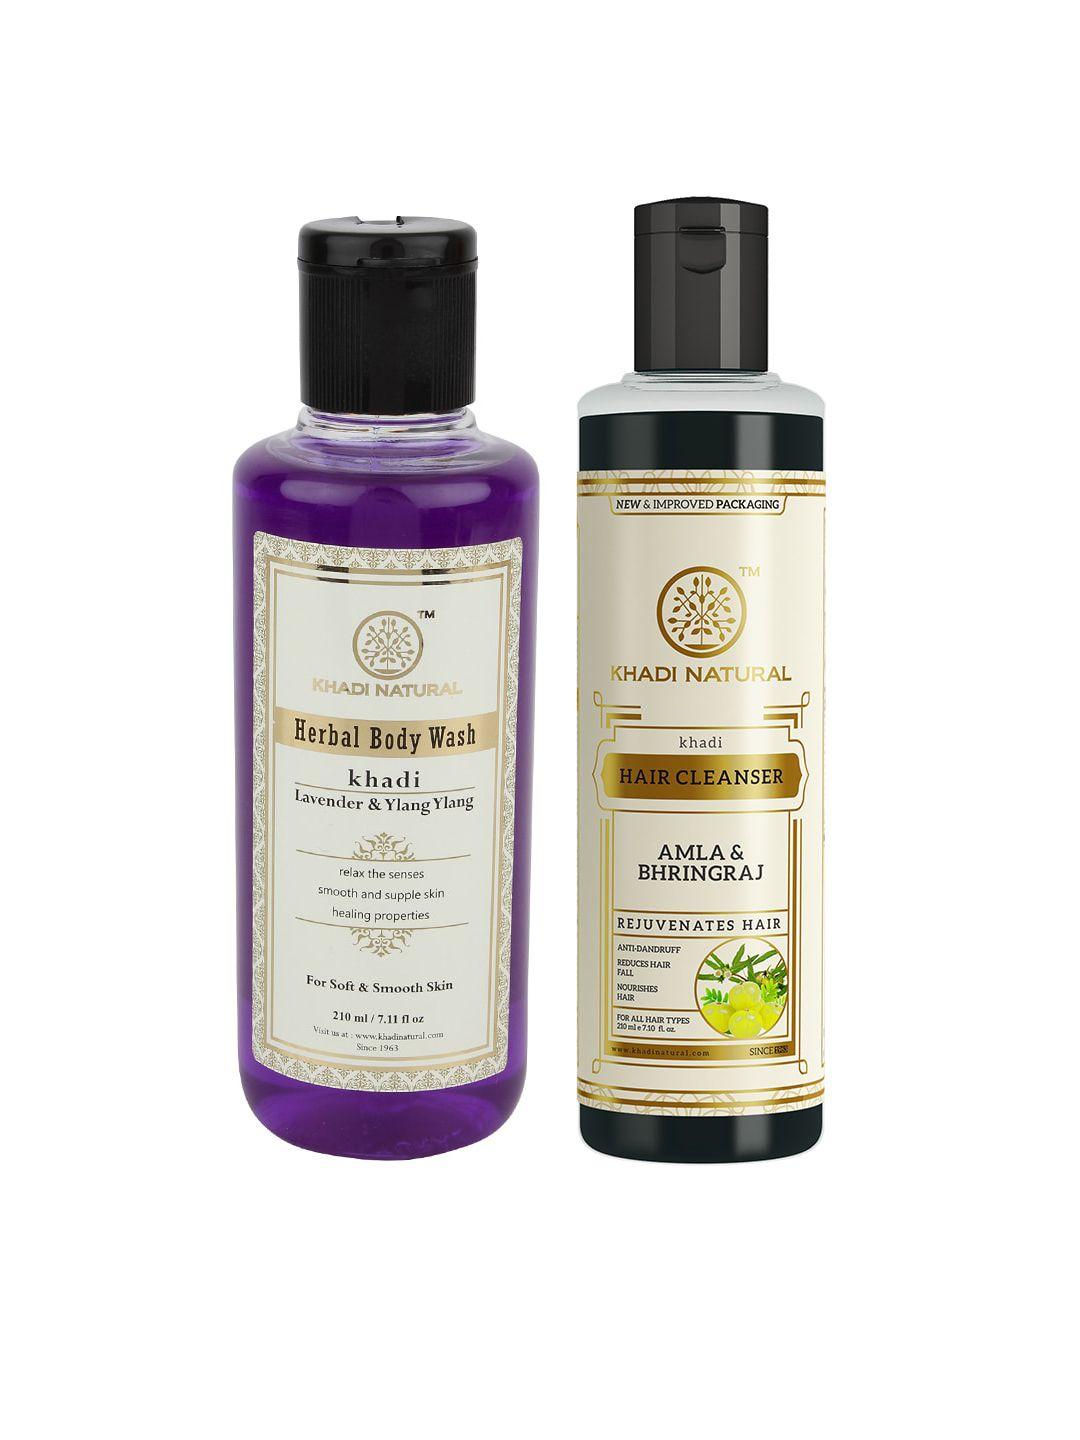 khadi natural set of amla & bhringraj hair cleanser -lavender herbal body wash